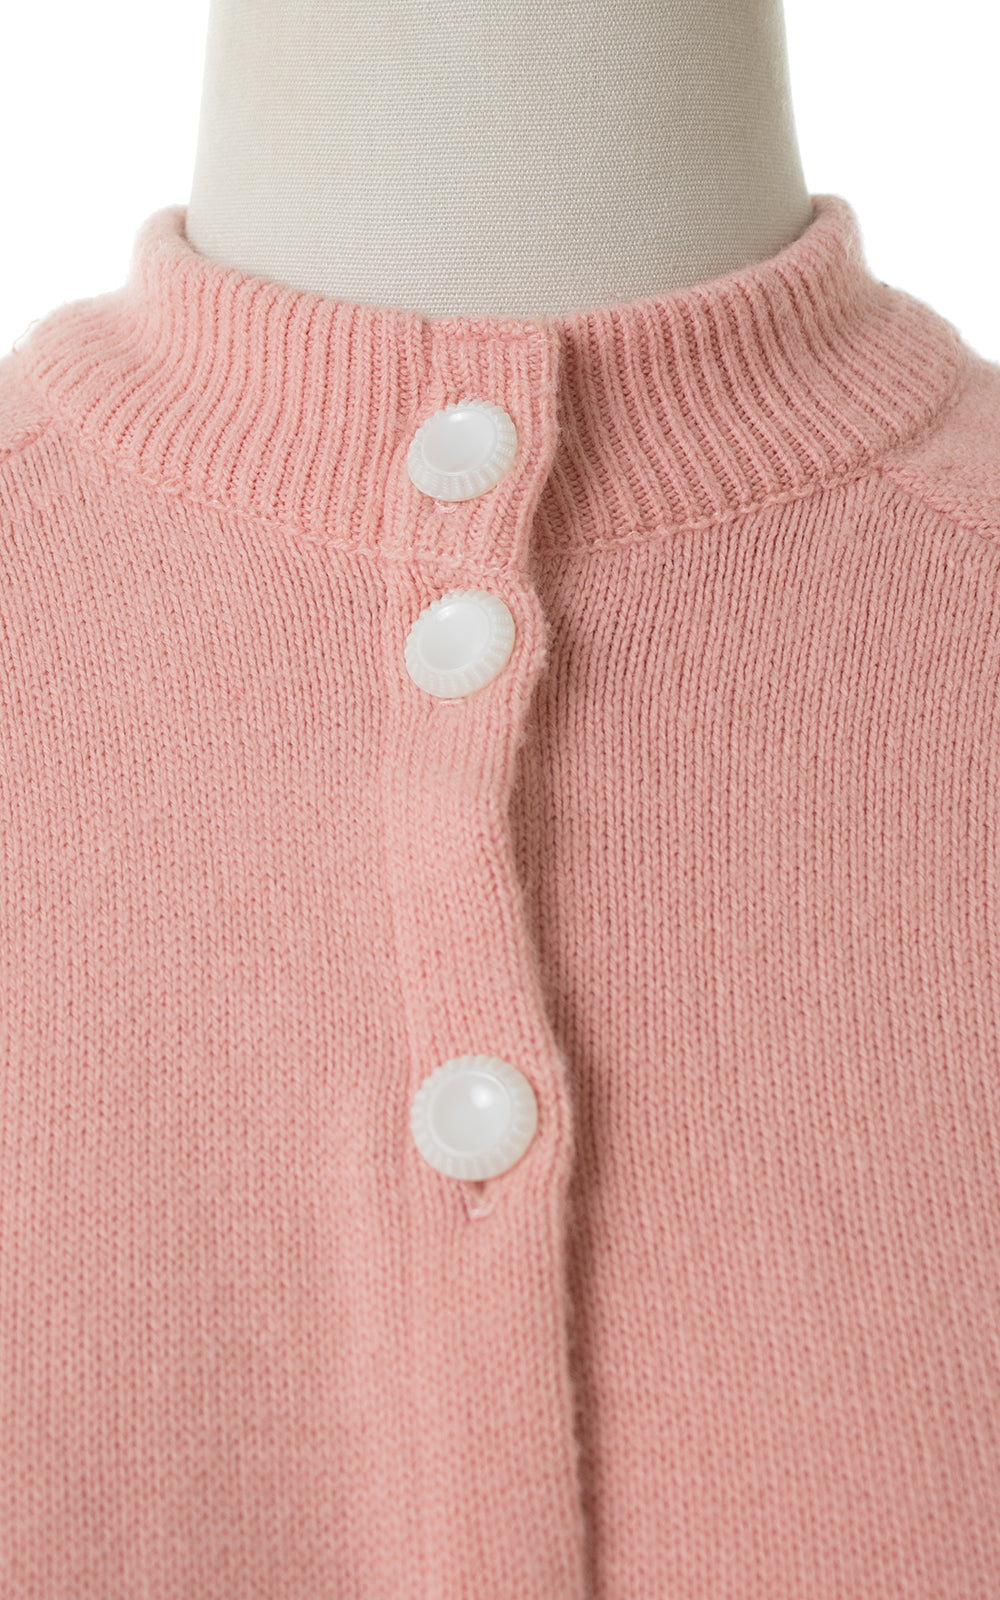 1950s Pink Acrylic Knit Cardigan